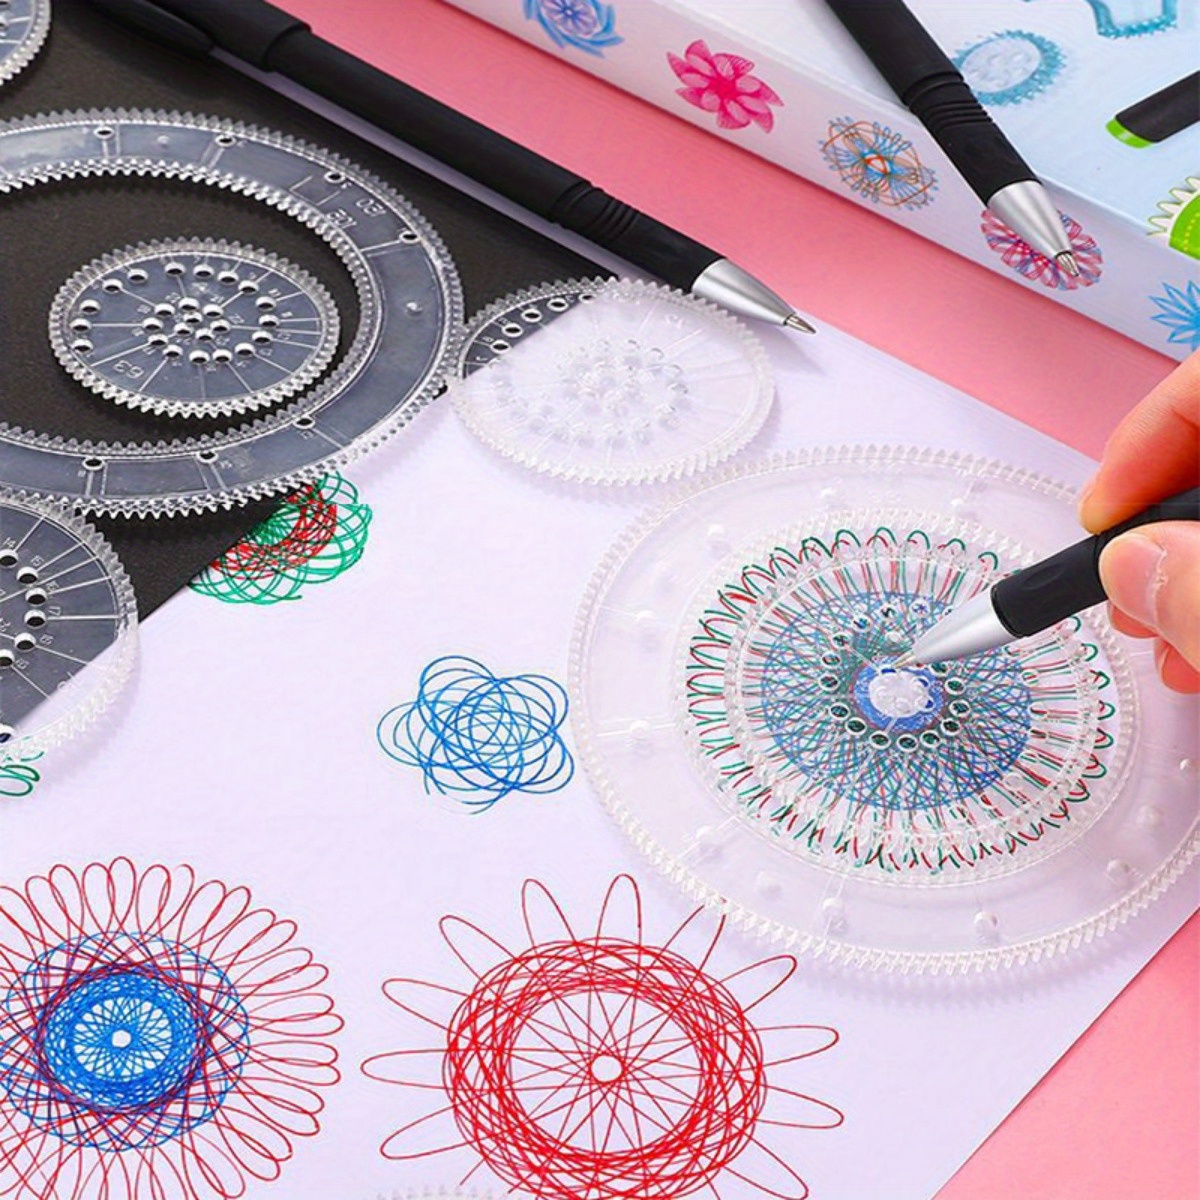 27pcs/set Spirograph Paint Coloring Accessories Spiral Designs